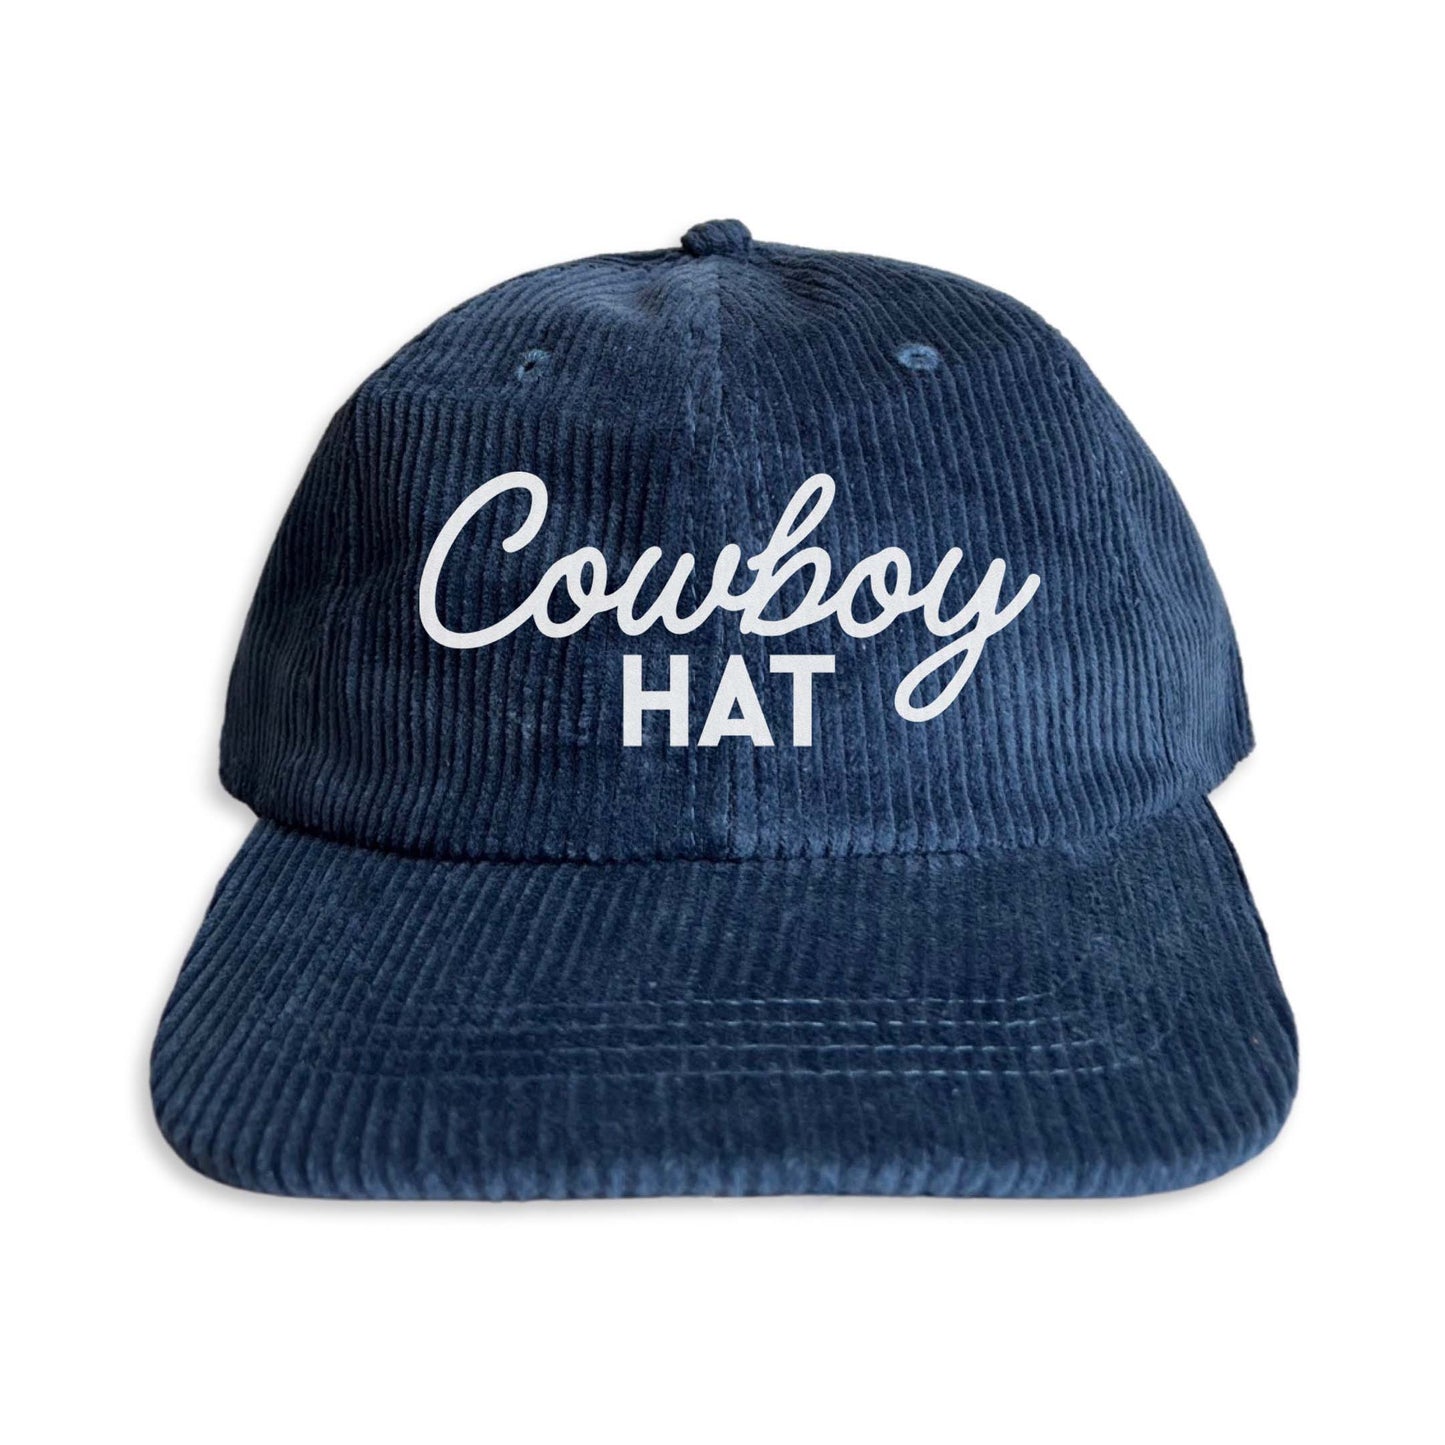 Cowboy Hat Corduroy Cap